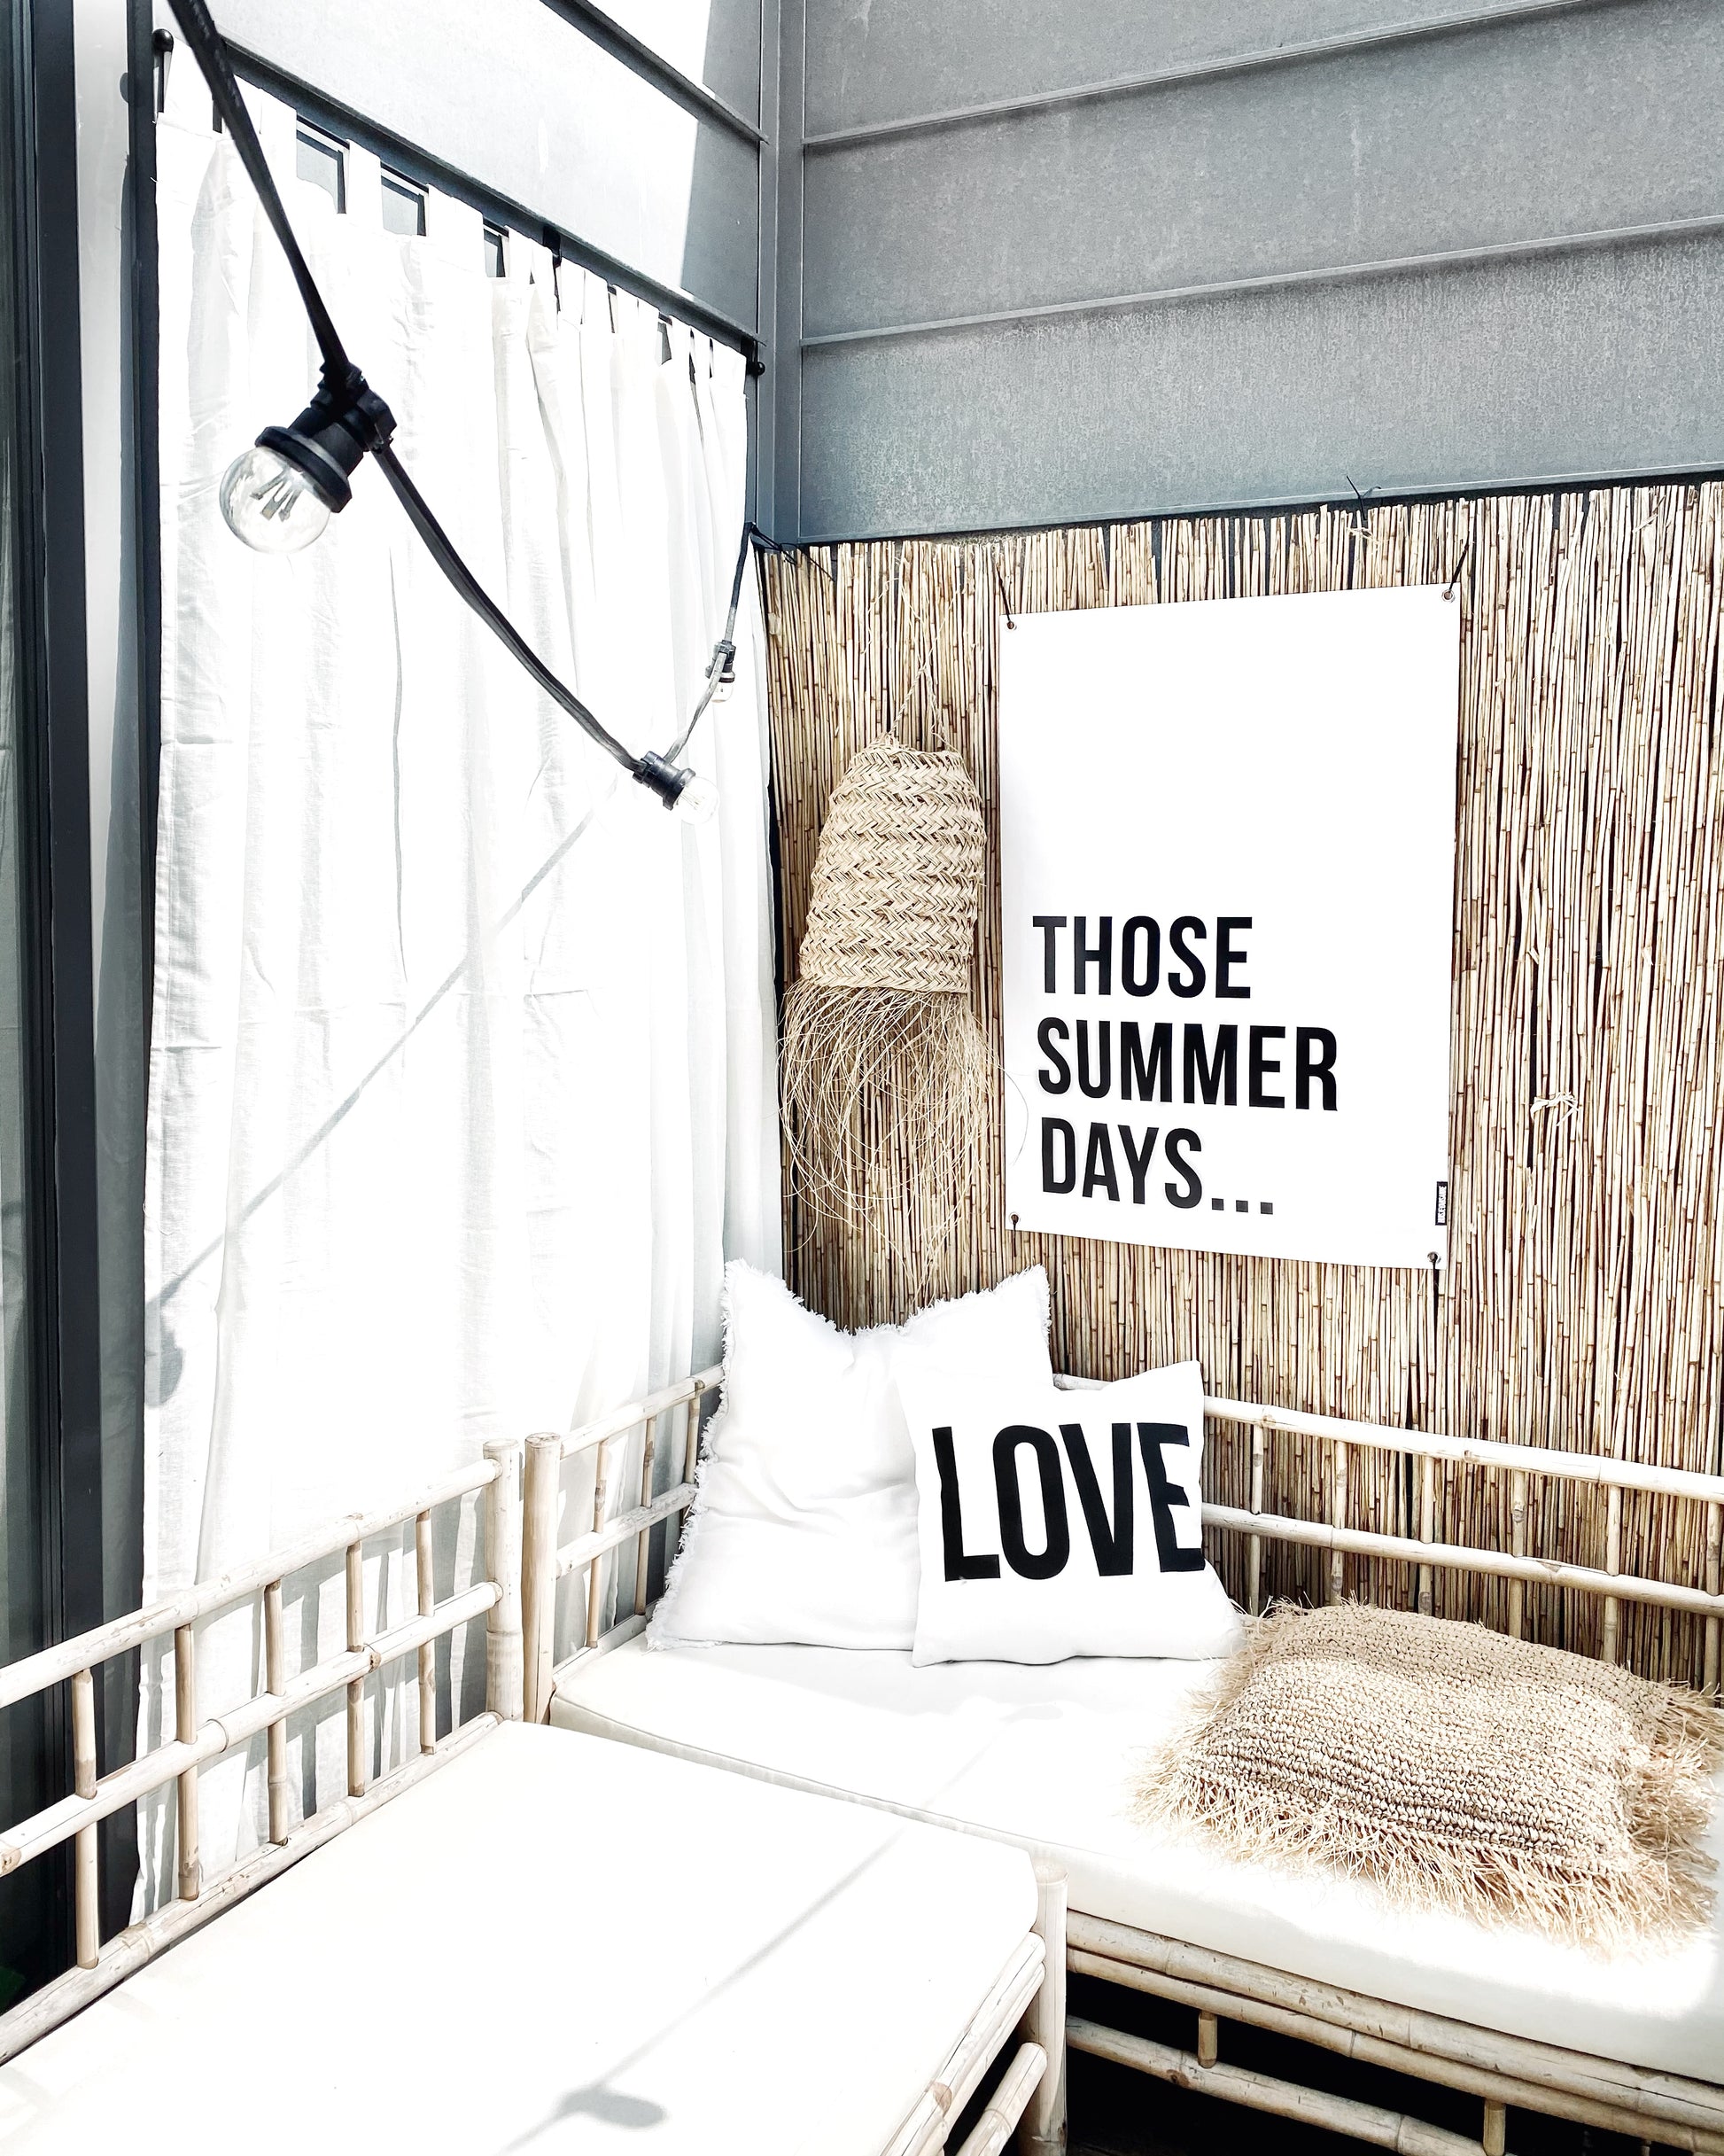 huisjevansanne tuinposter zwart wit met tekst those summer days